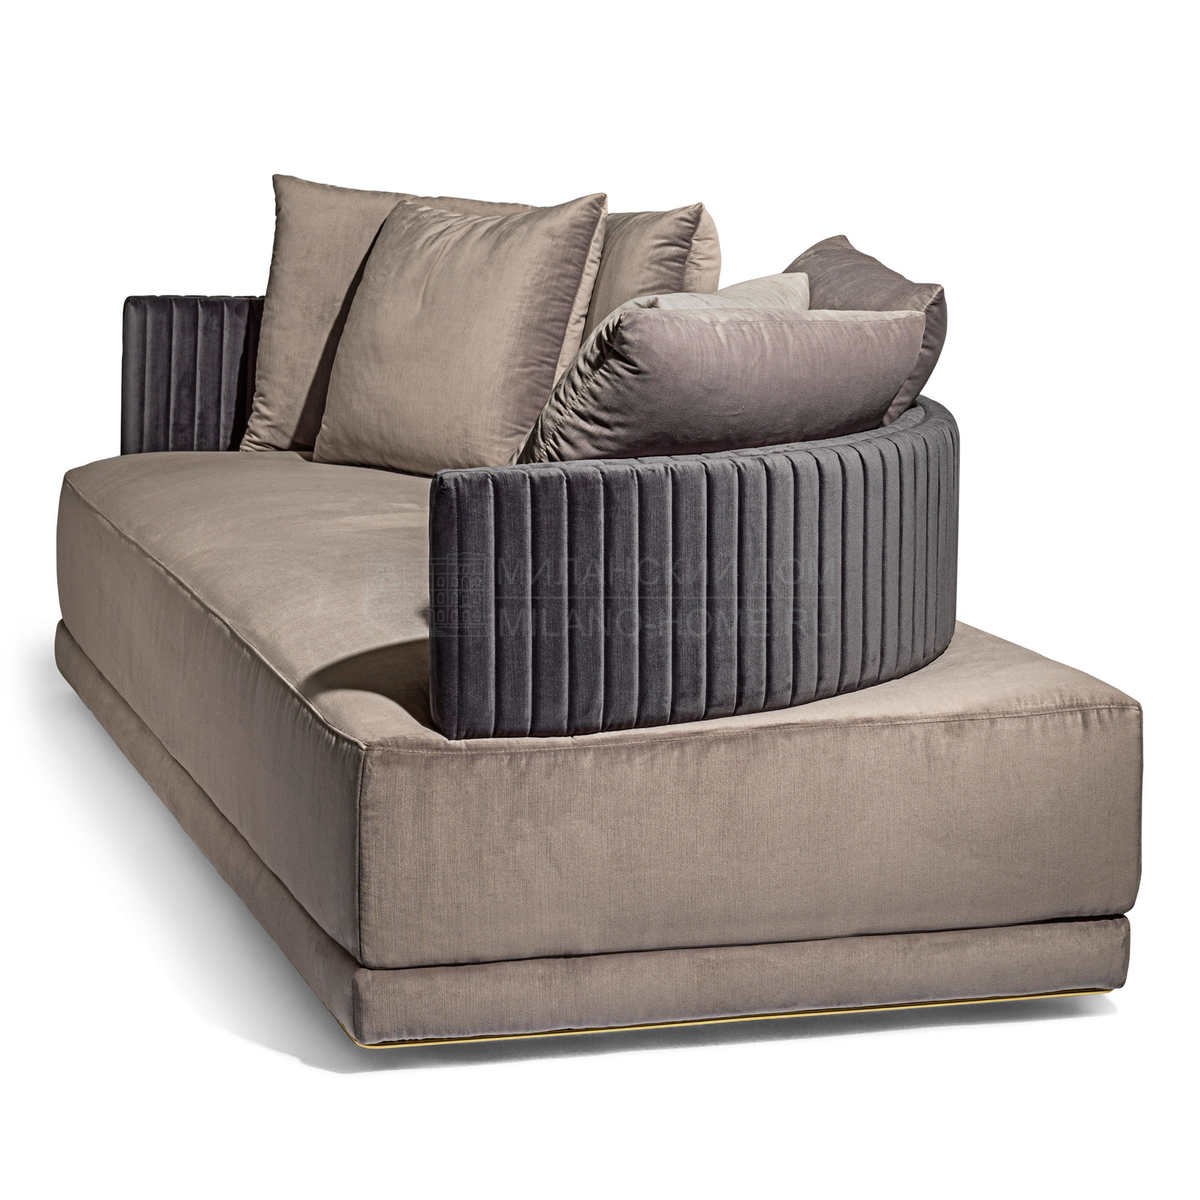 Прямой диван Miller sofa из Италии фабрики IPE CAVALLI VISIONNAIRE